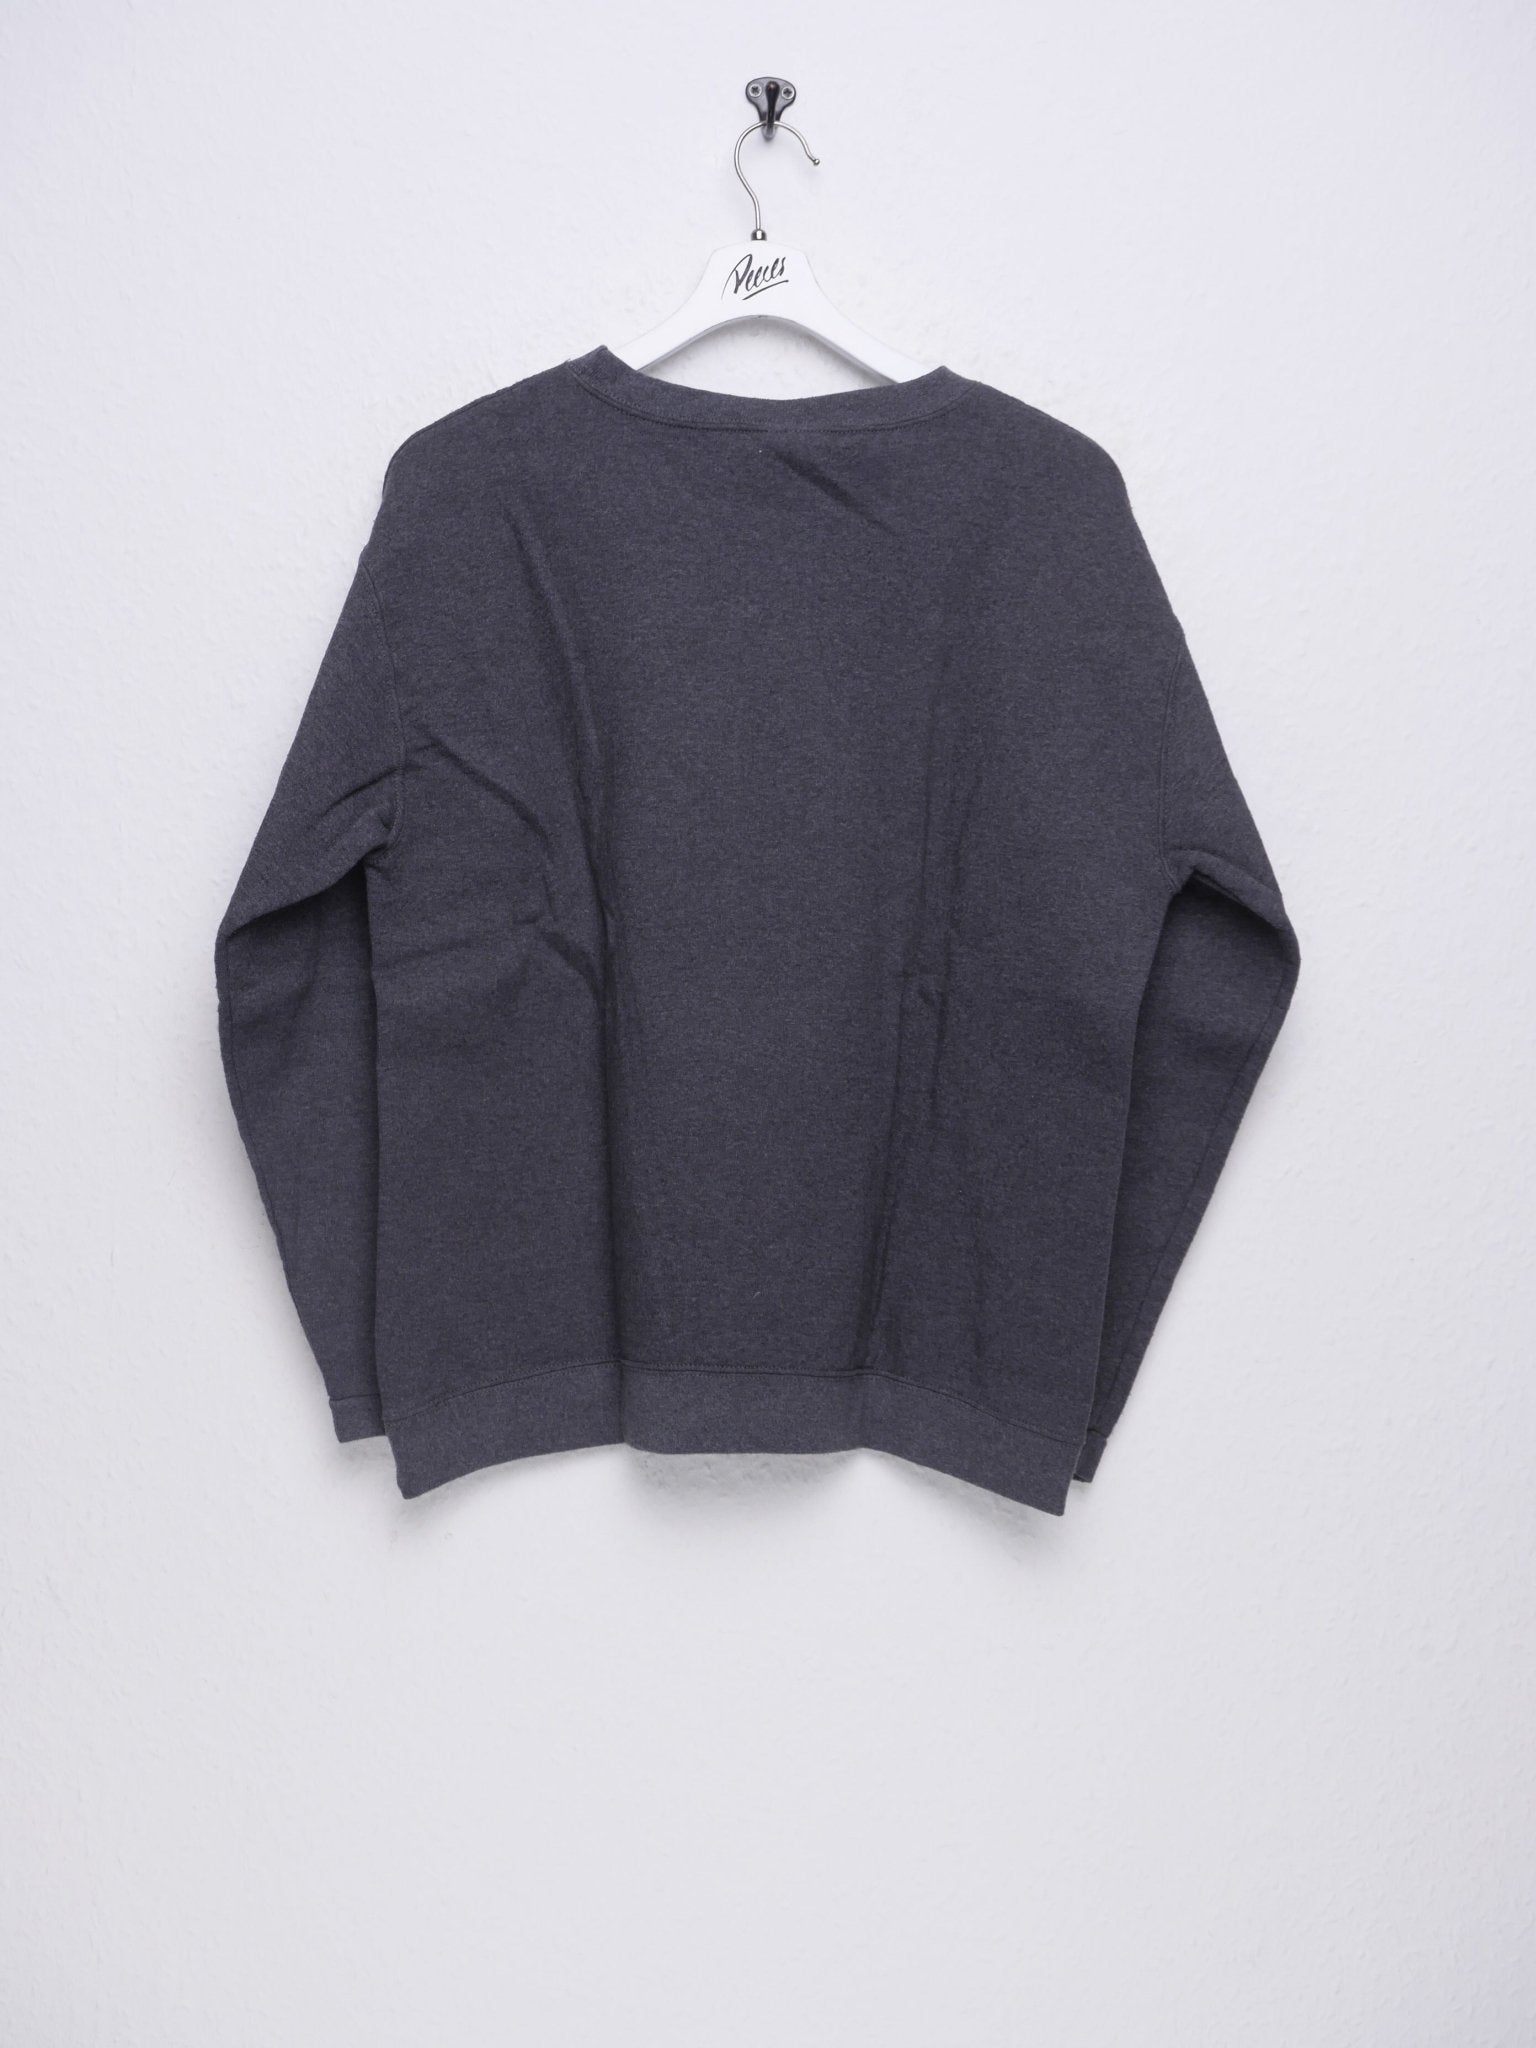 Plain basic grey Sweater - Peeces